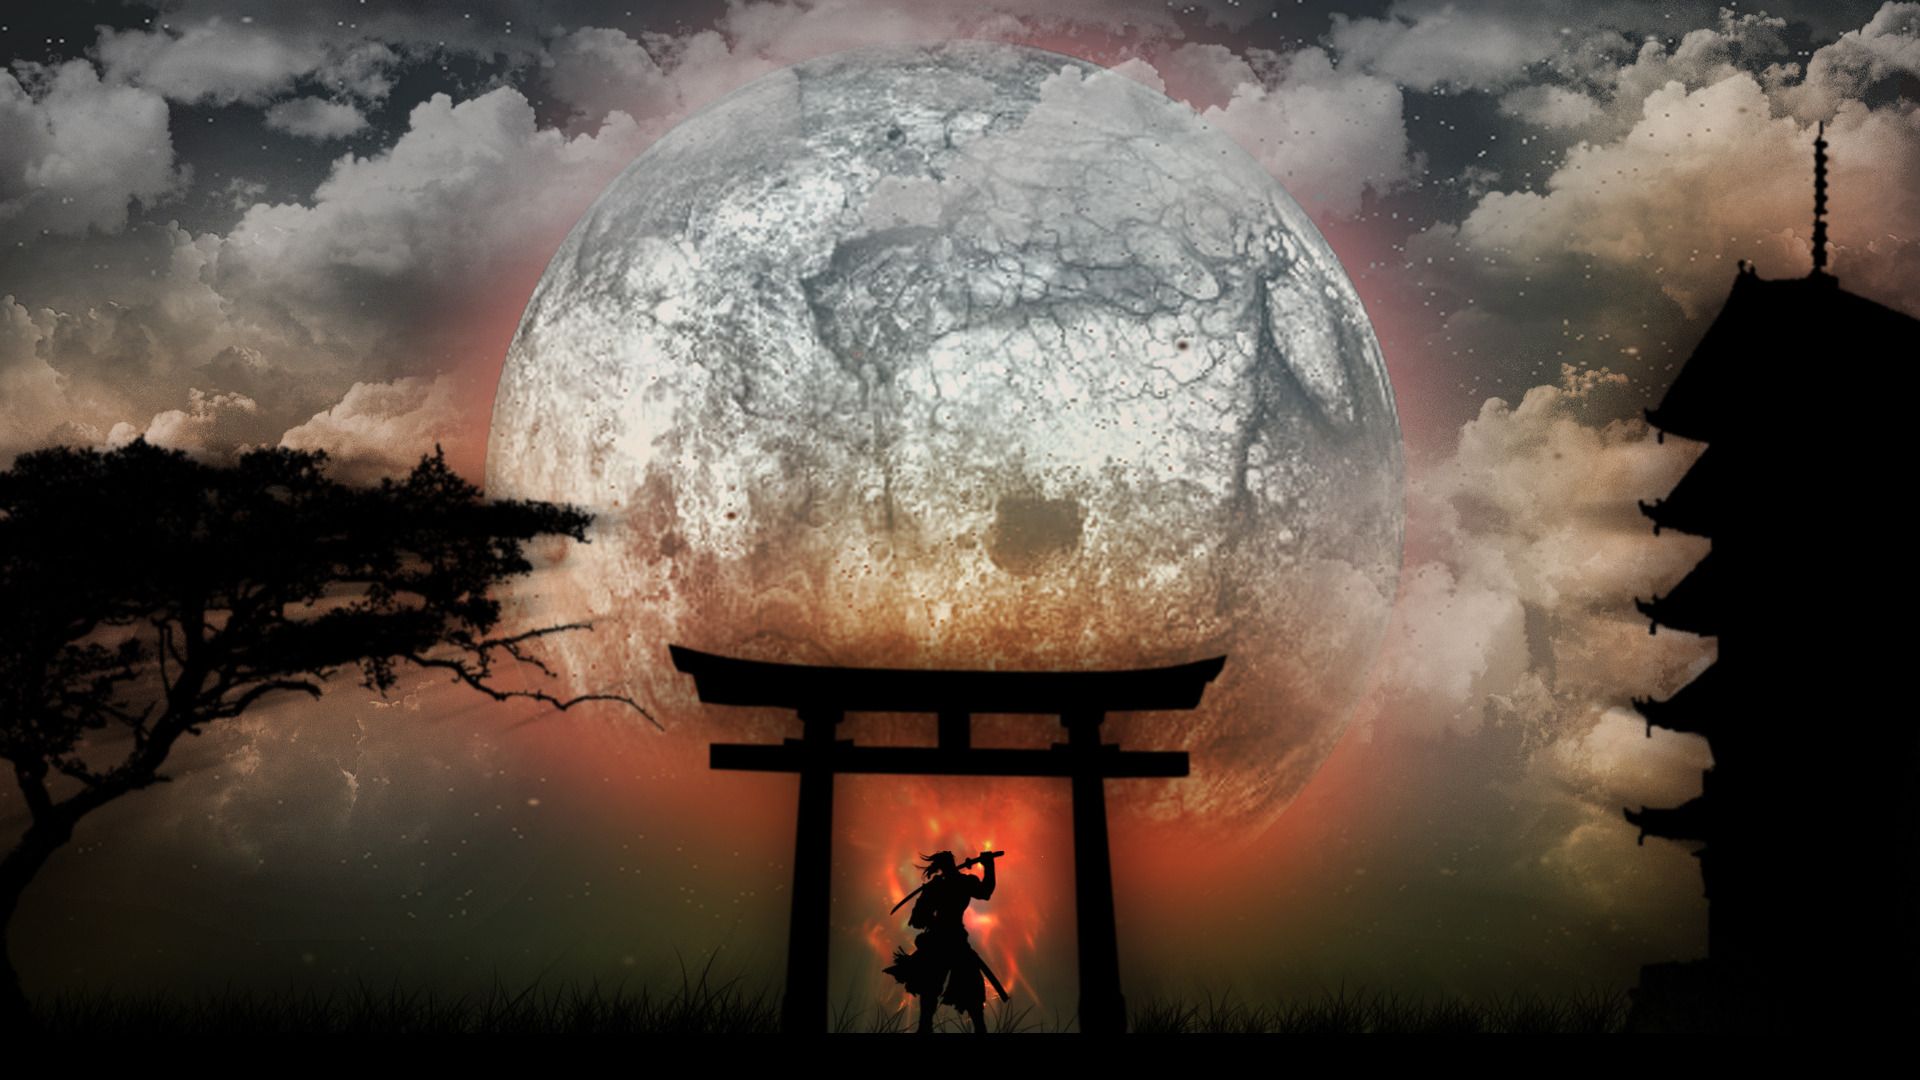 night-samurai-fantasy-hd-wallpaper-1920x1080-8351.jpg